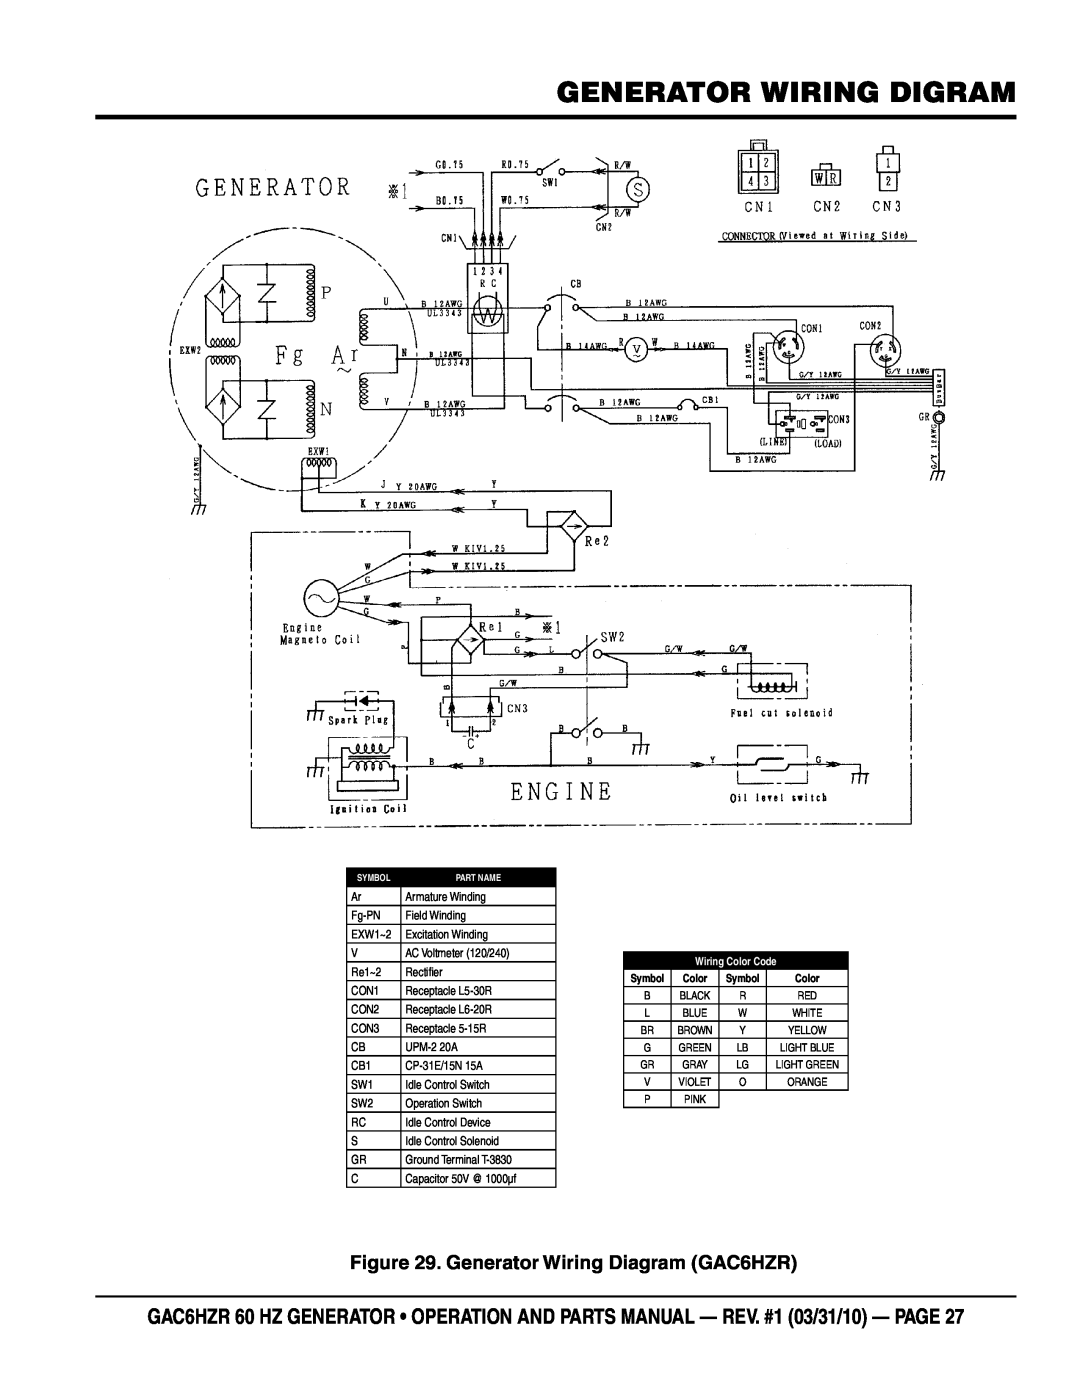 Multiquip GAC-6HZR manual generator wiring digram, Generator Wiring Diagram GAC6HZR, Wiring Color Code 